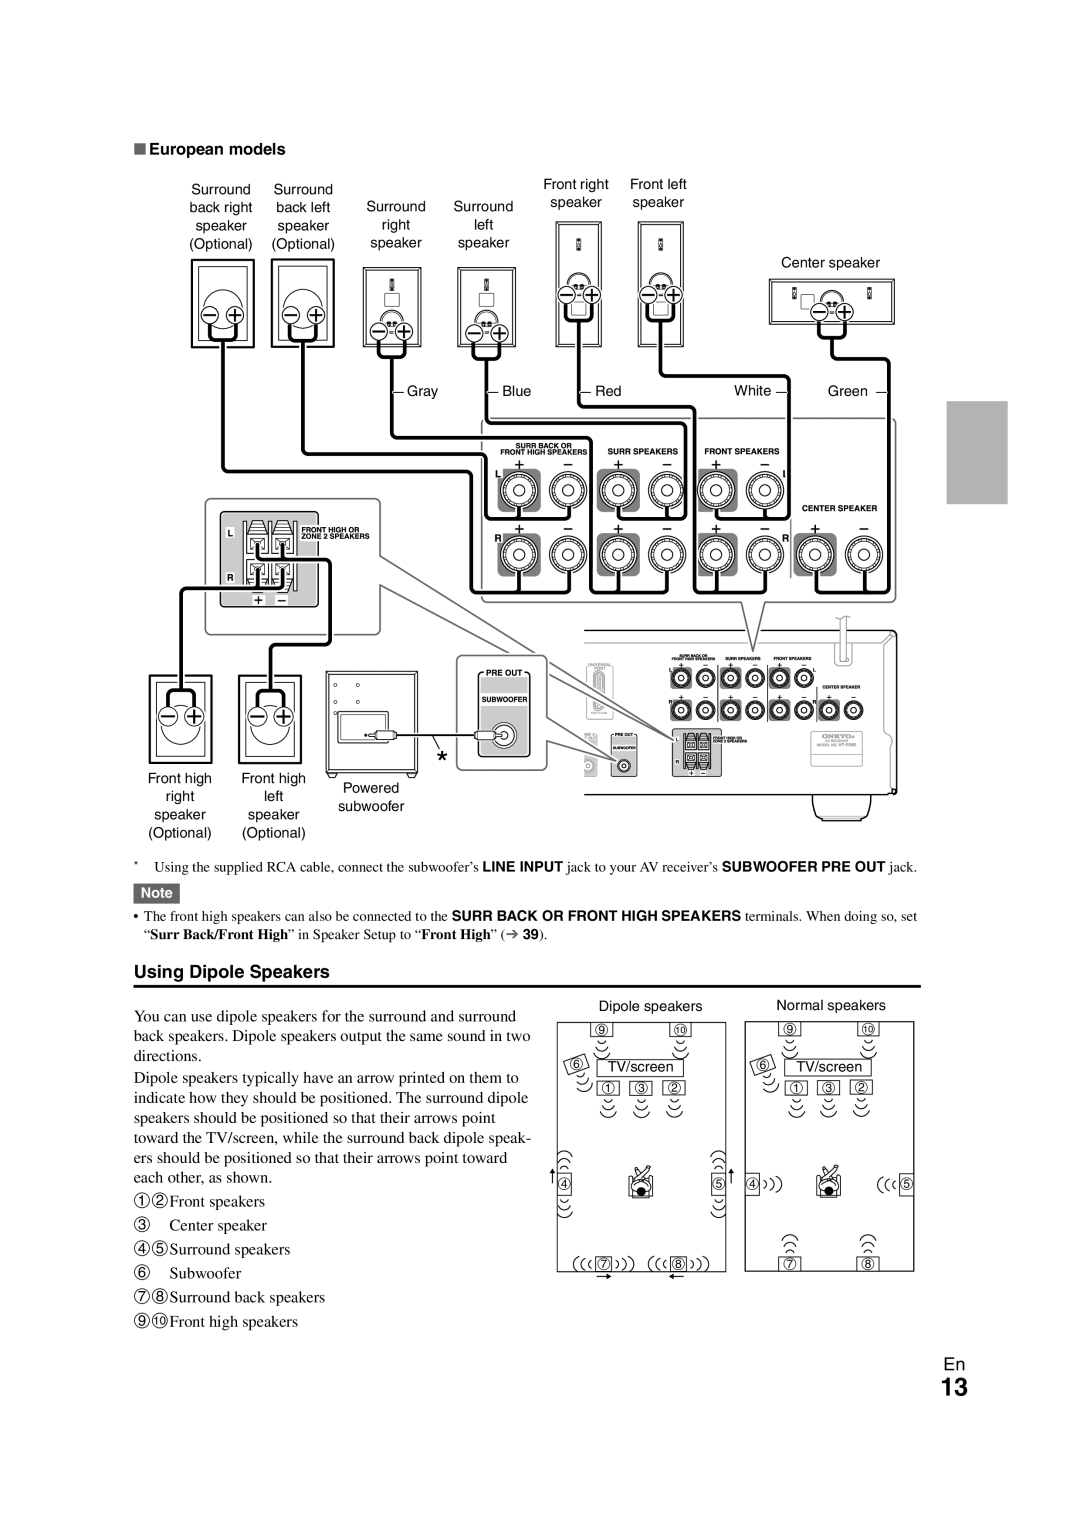 Onkyo HT-R980 instruction manual Using Dipole Speakers, European models 